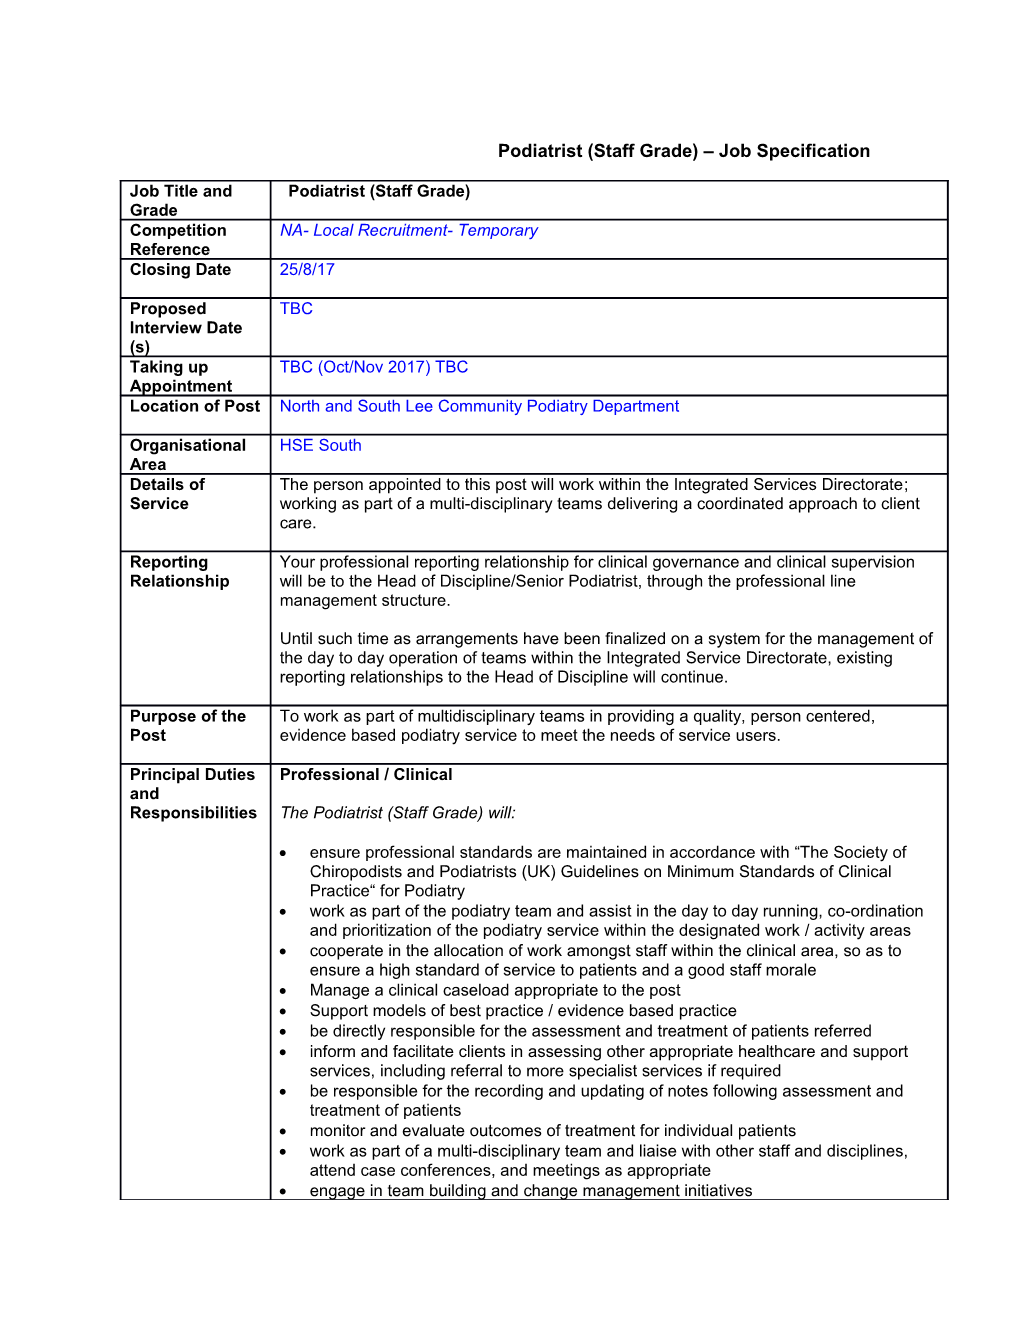 Podiatrist (Staff Grade) Job Specification